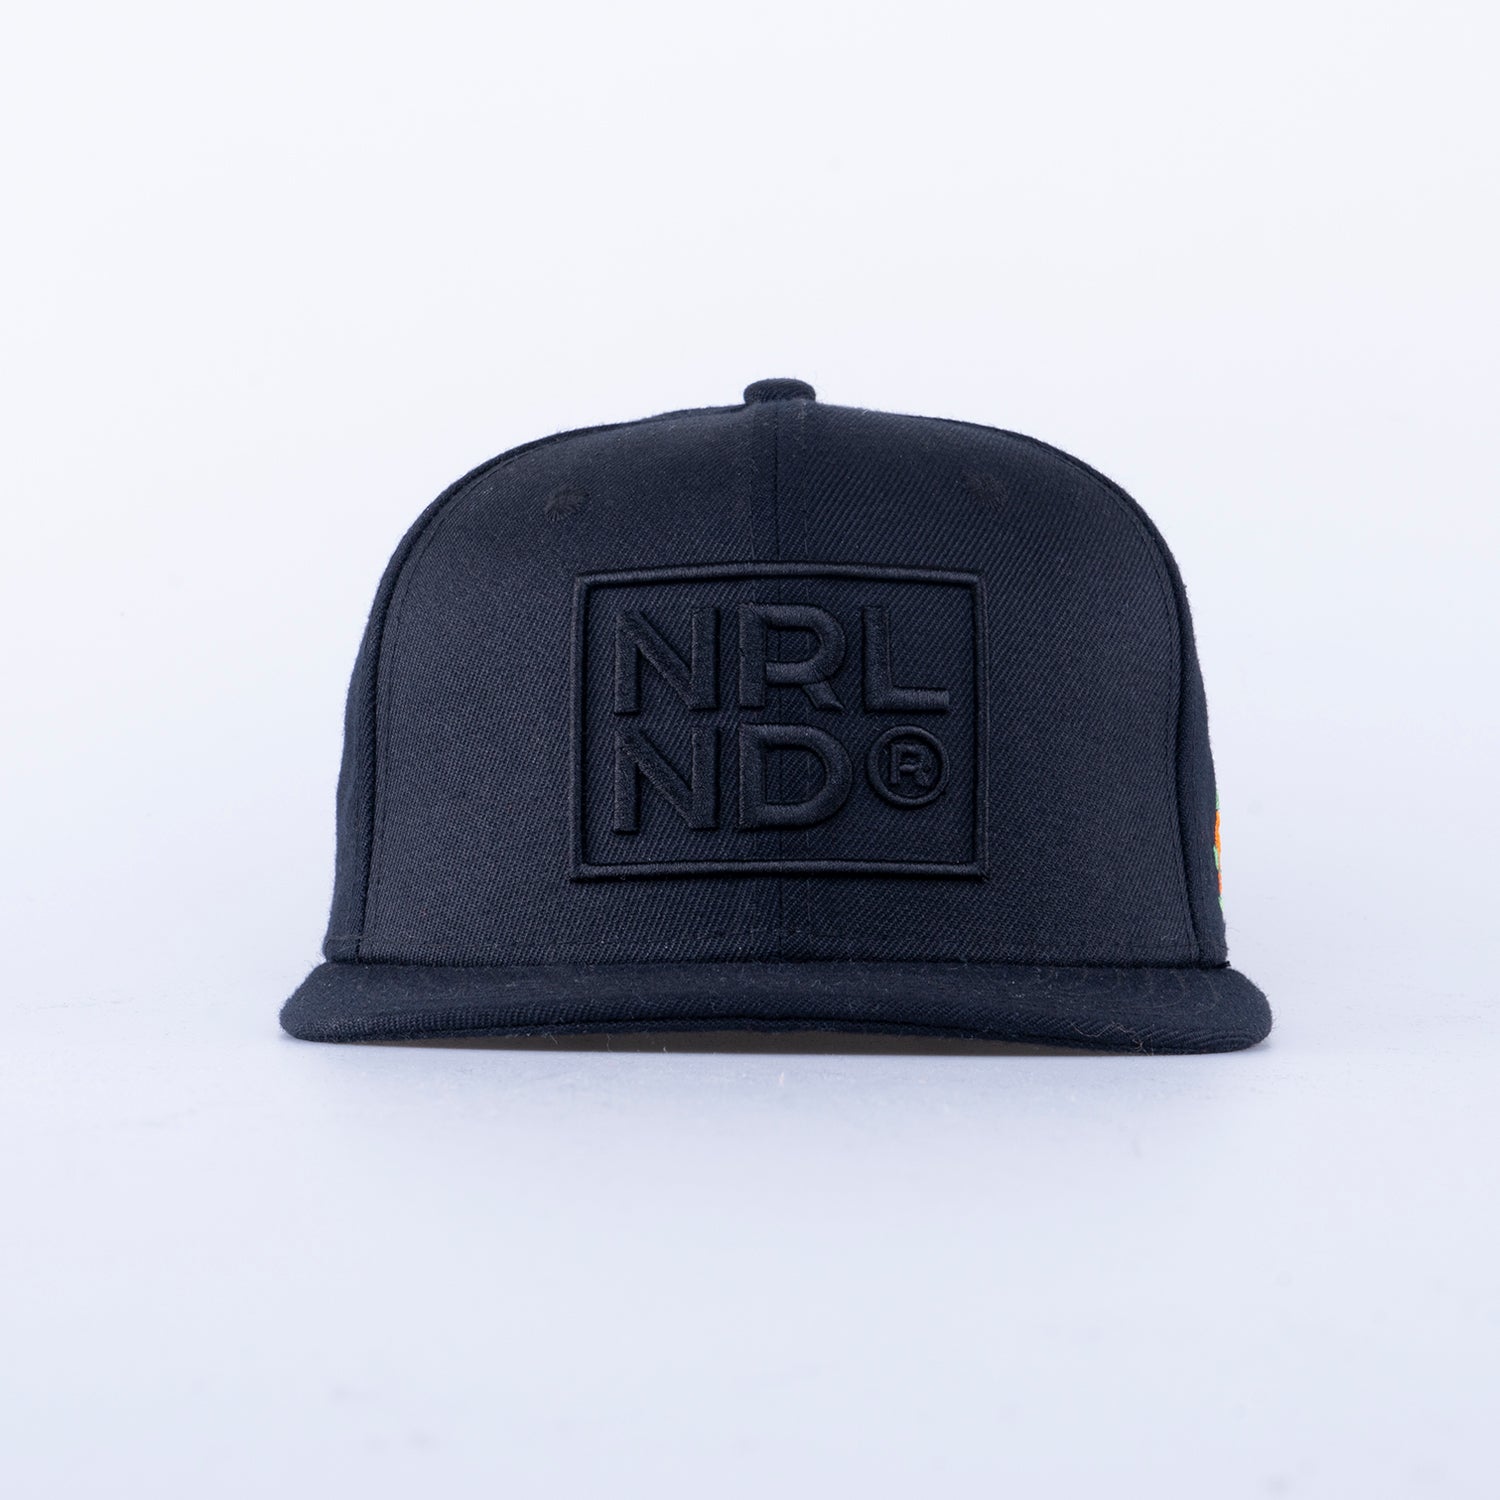 NRLND CAP - ALL BLACK